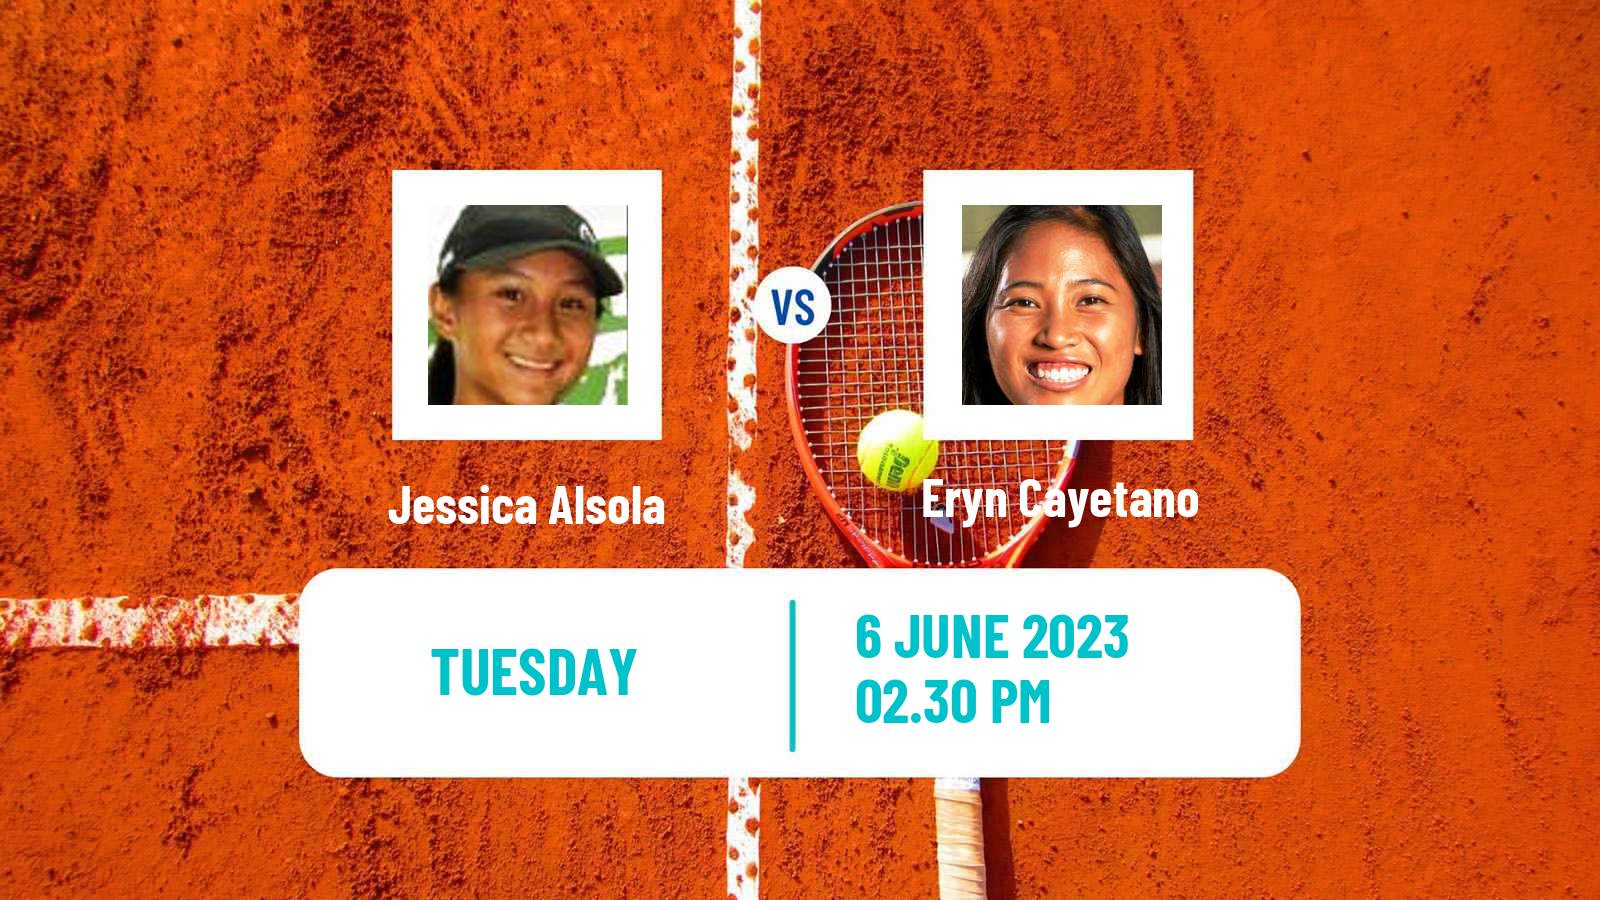 Tennis ITF W15 San Diego 3 Women Jessica Alsola - Eryn Cayetano